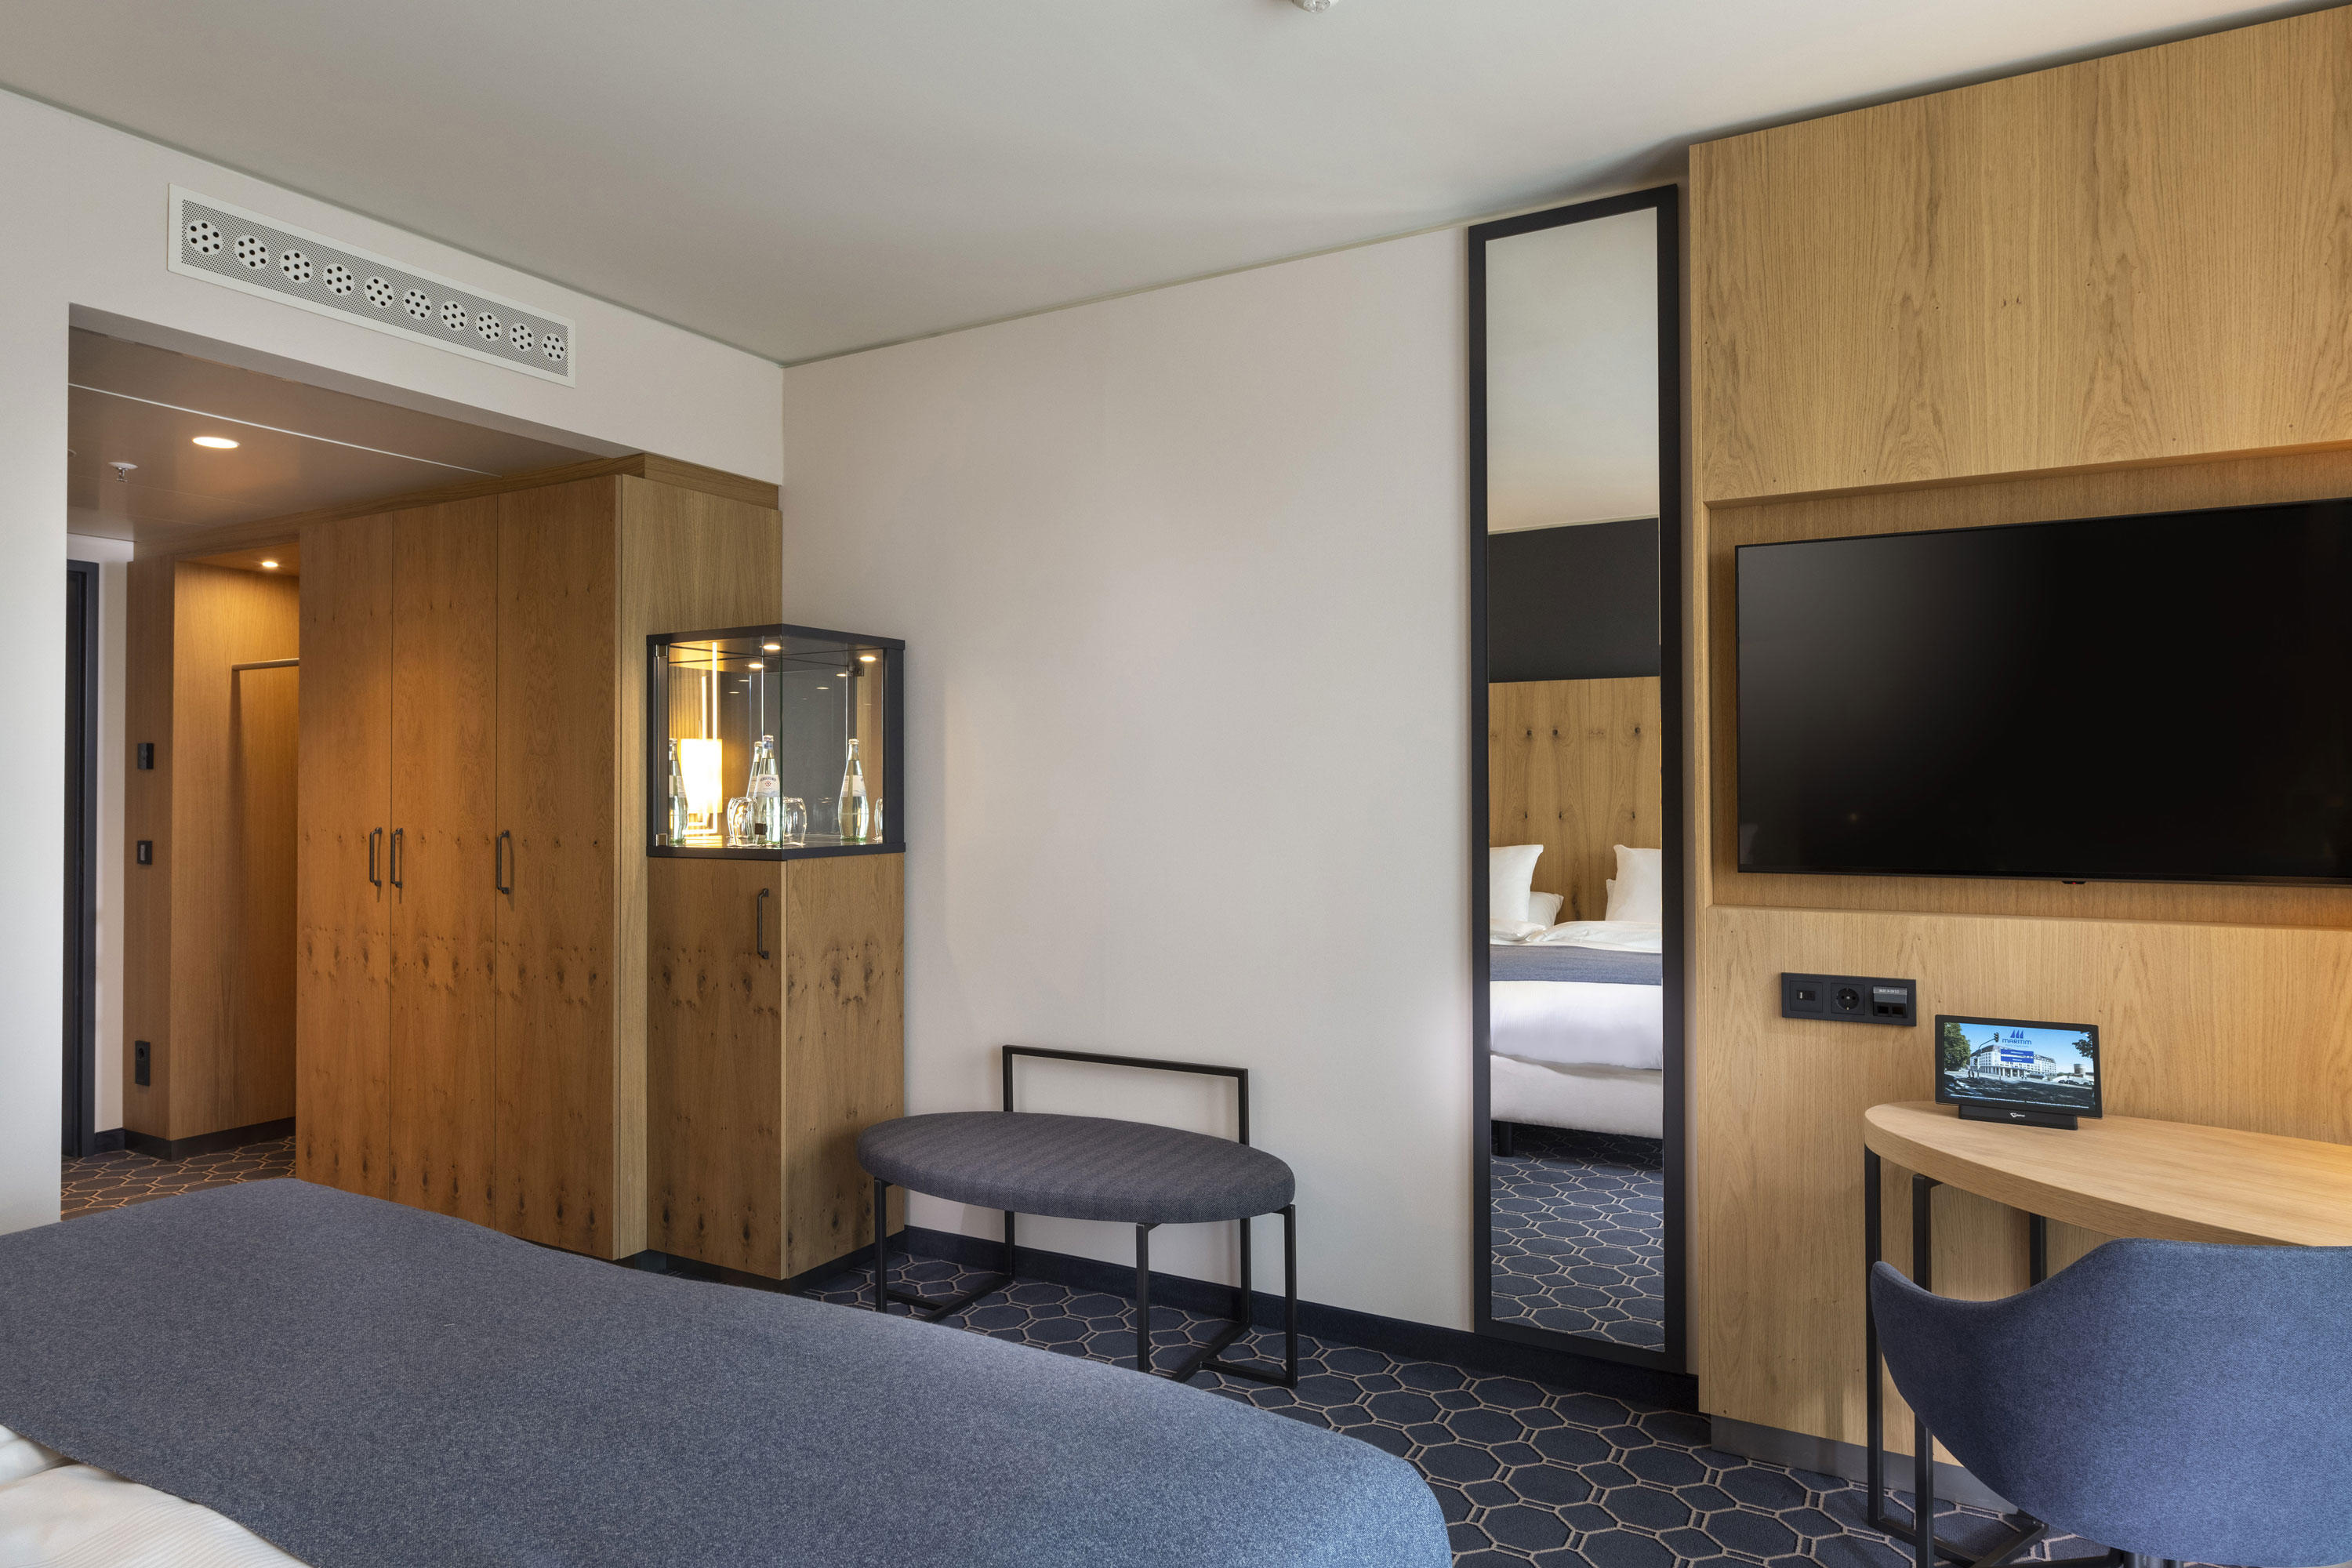 Comfort Zimmer im Maritim Hotel Ingolstadt